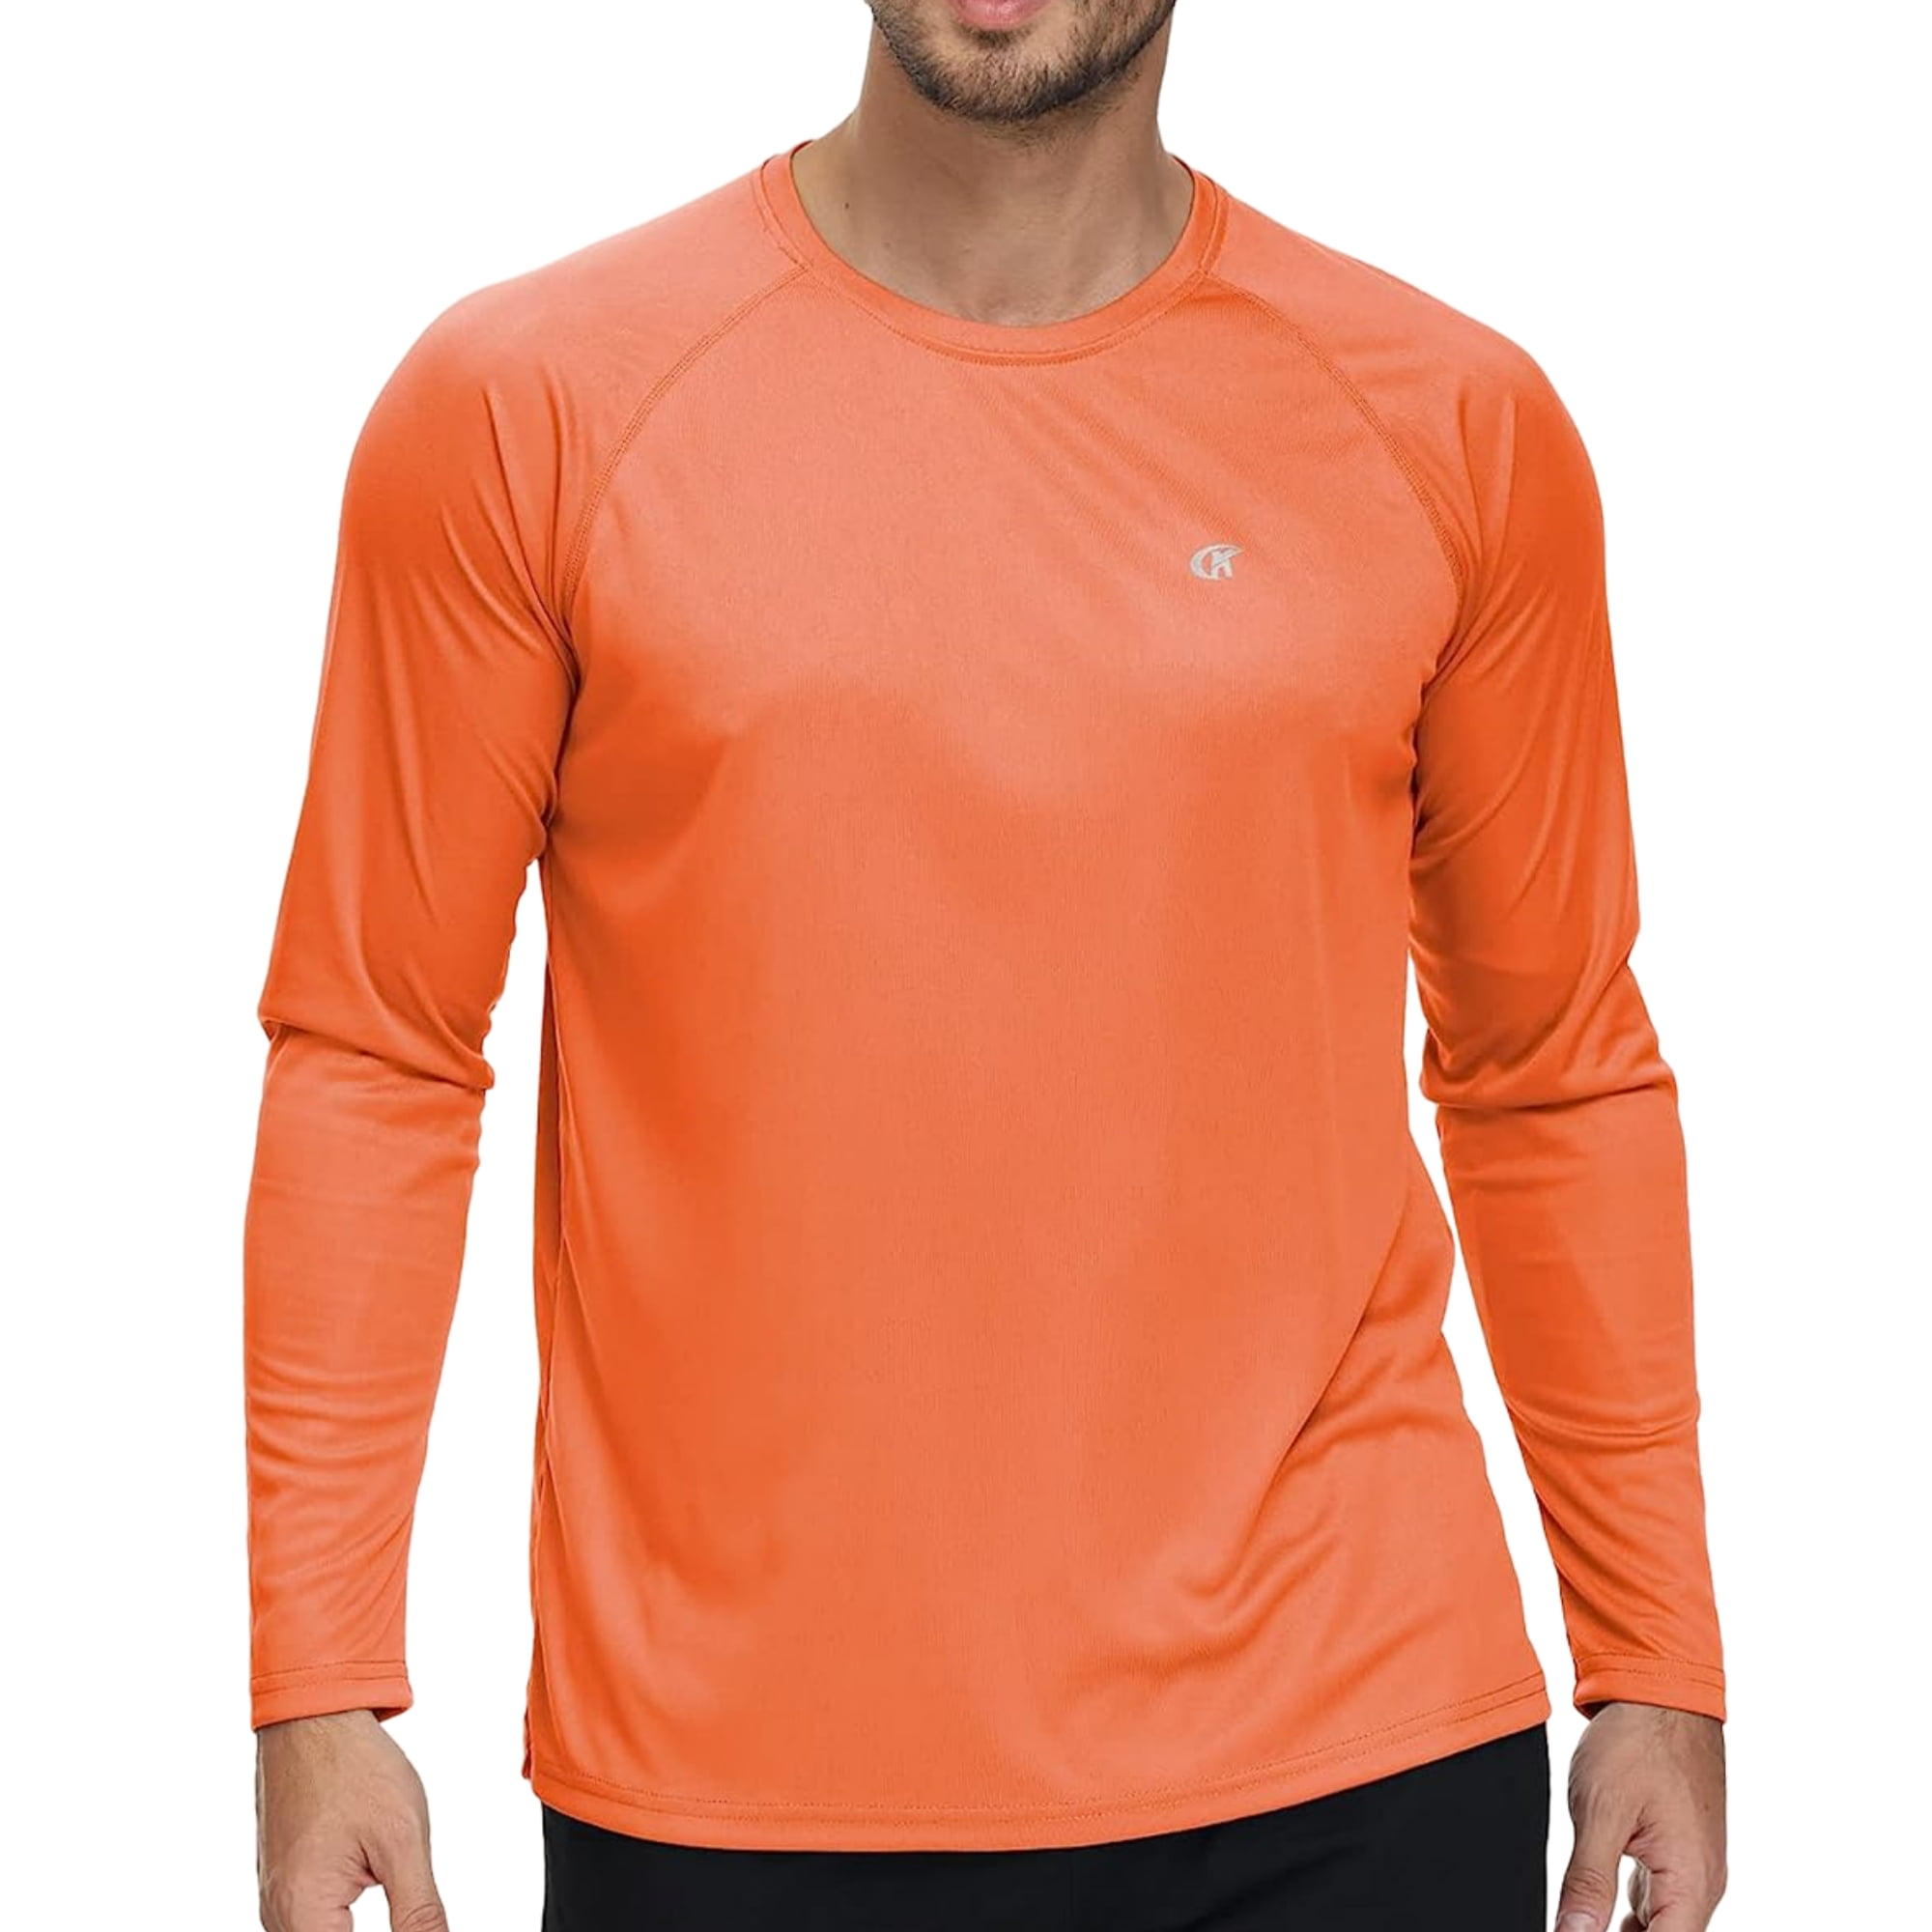 HUK Performance Fishing Shirt Long Sleeve Pullover Orange Shirt Size L